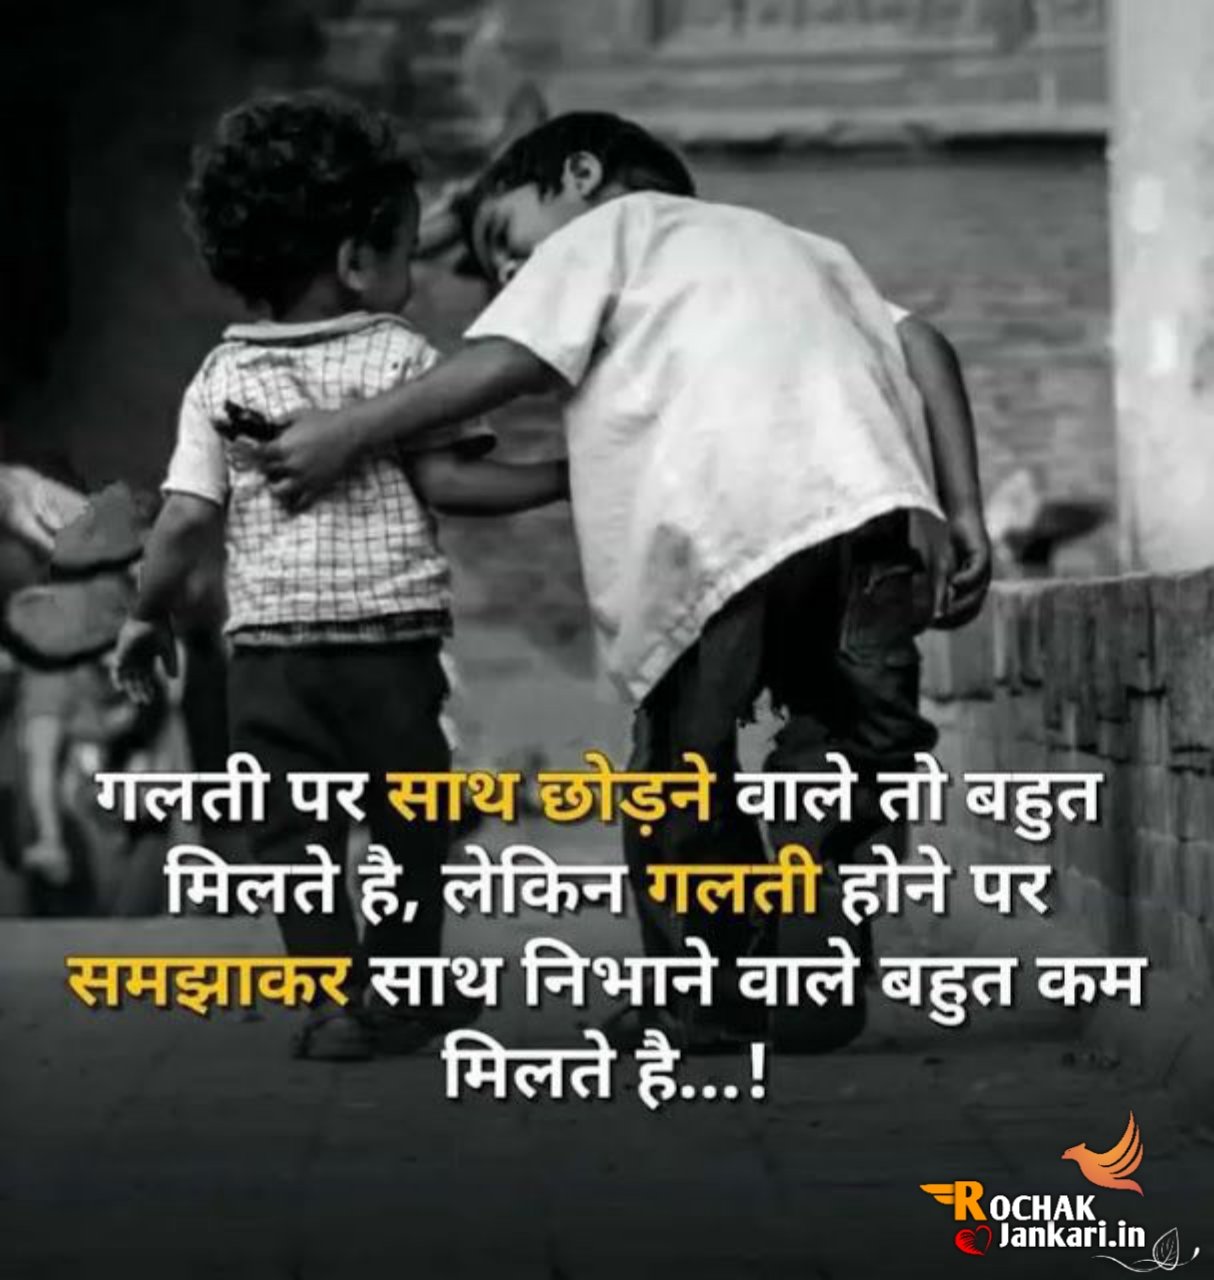 true love friendship quotes in hindi